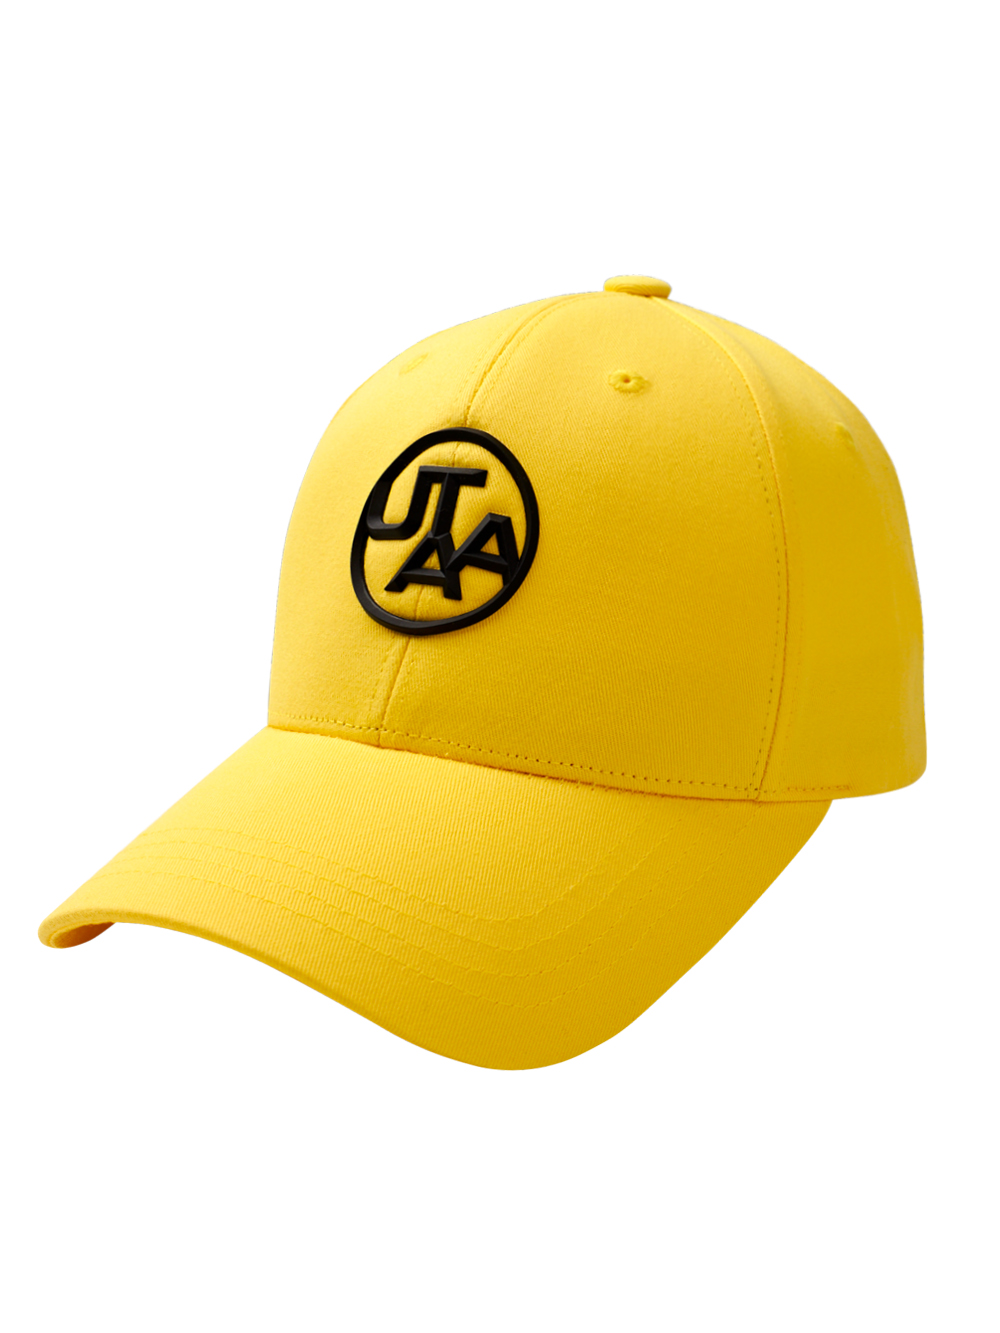 UTAA Figure Emblem Color Cap : Yellow (UC0GCU118YE)